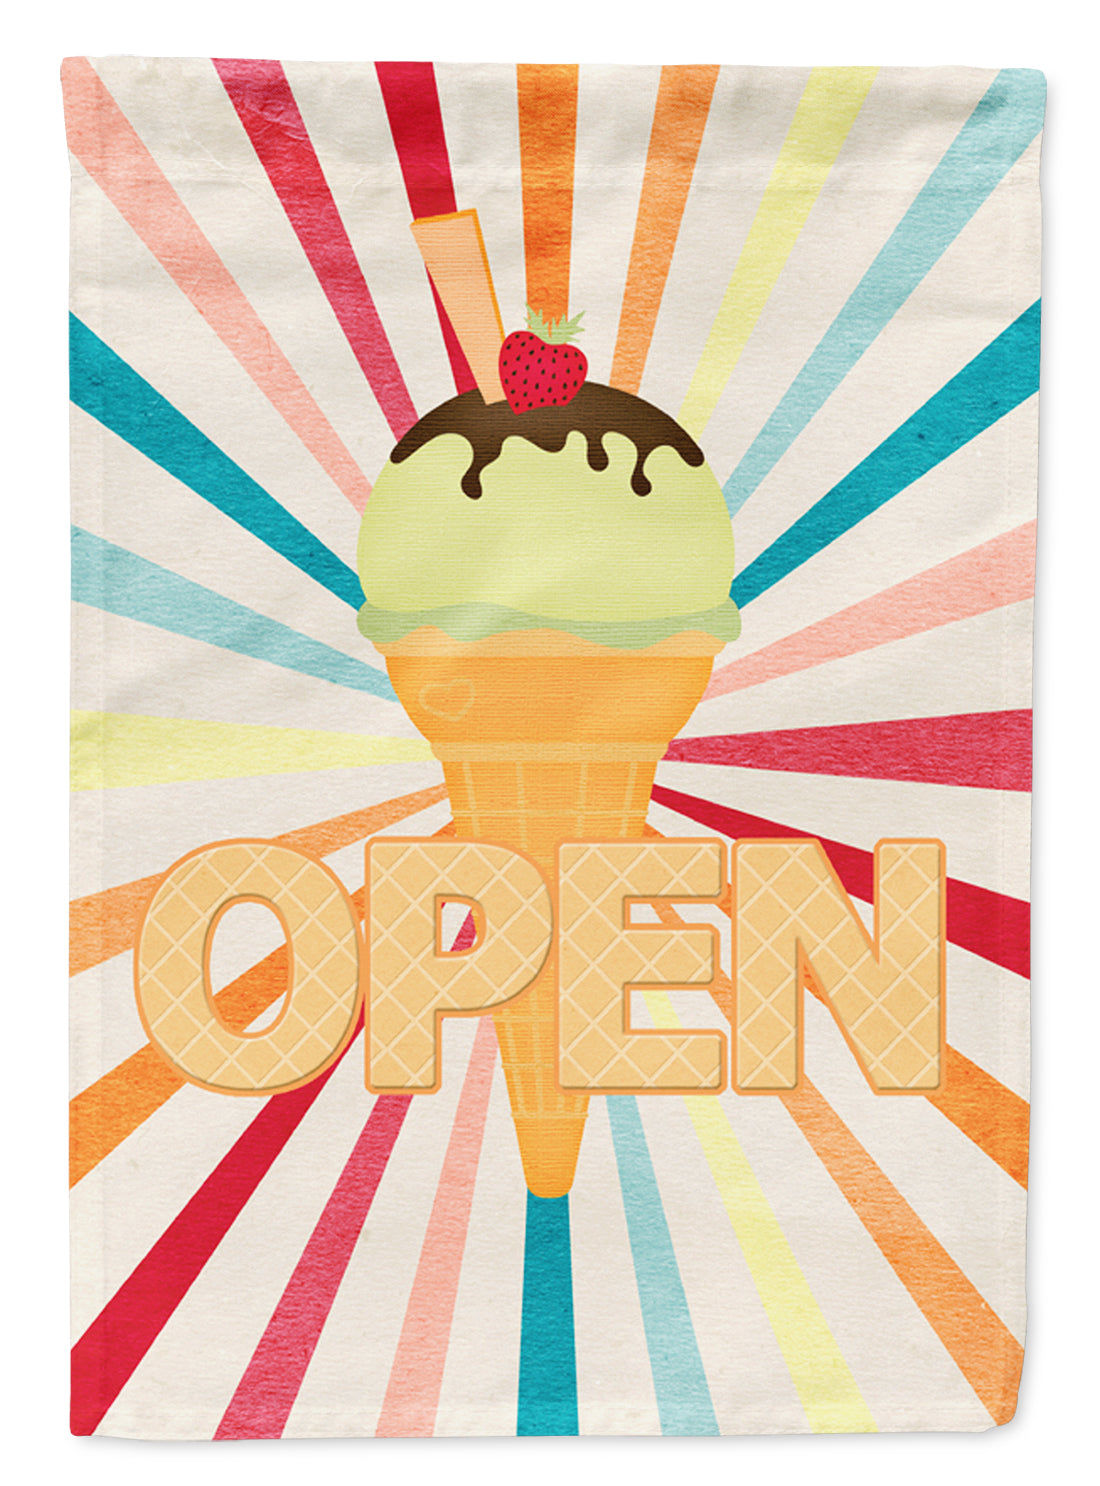 Ice Cream shop or stand Open Flag Garden Size SB3113GF